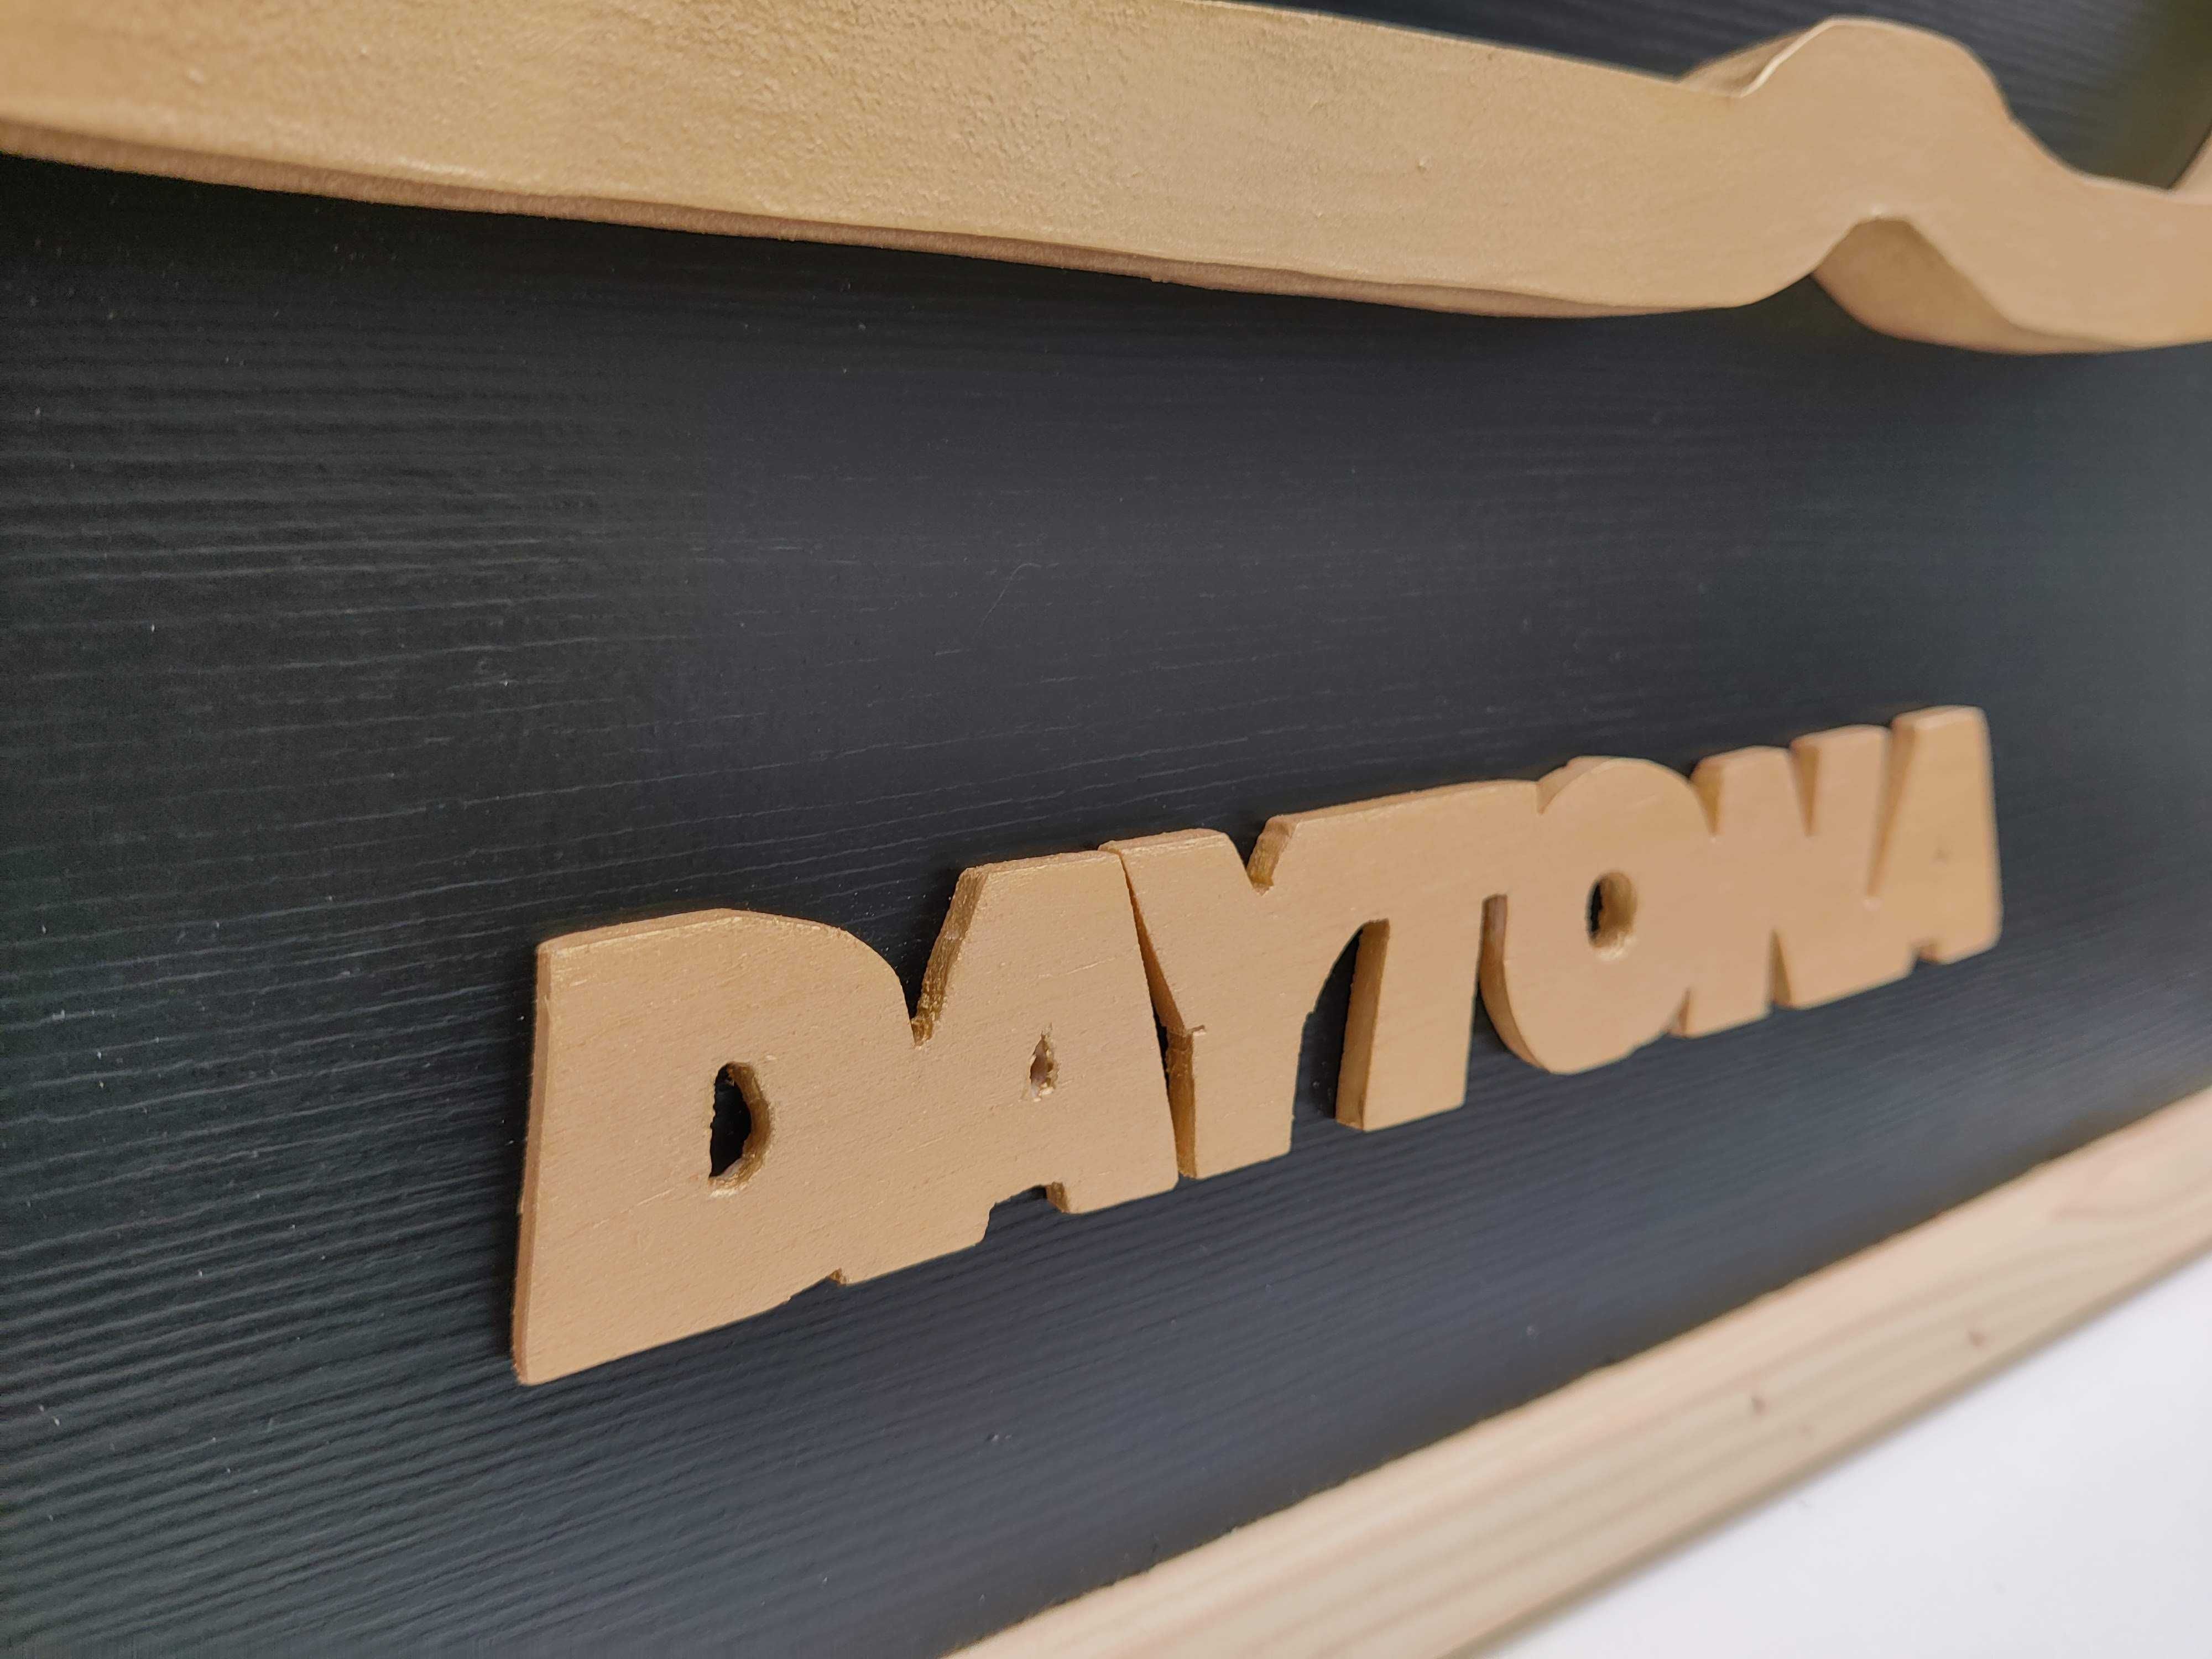 Pista em madeira Daytona